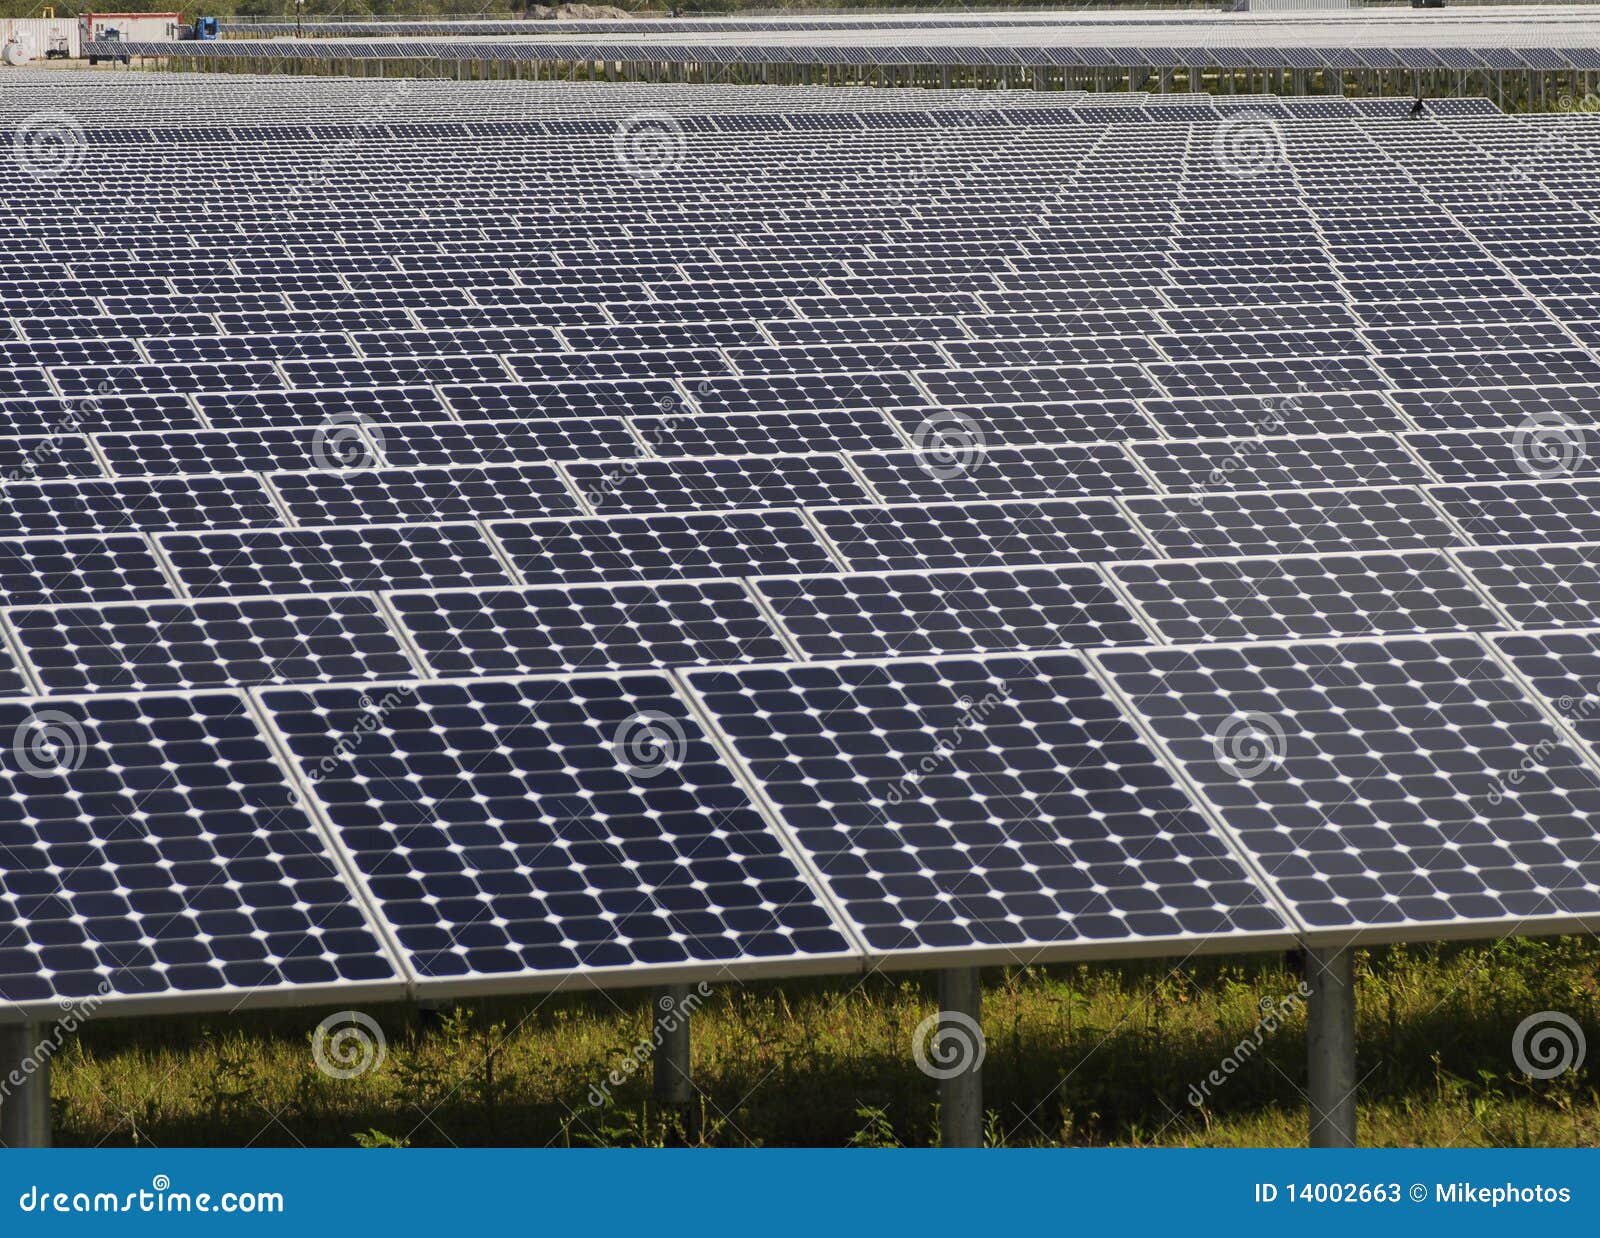 array of solar panels